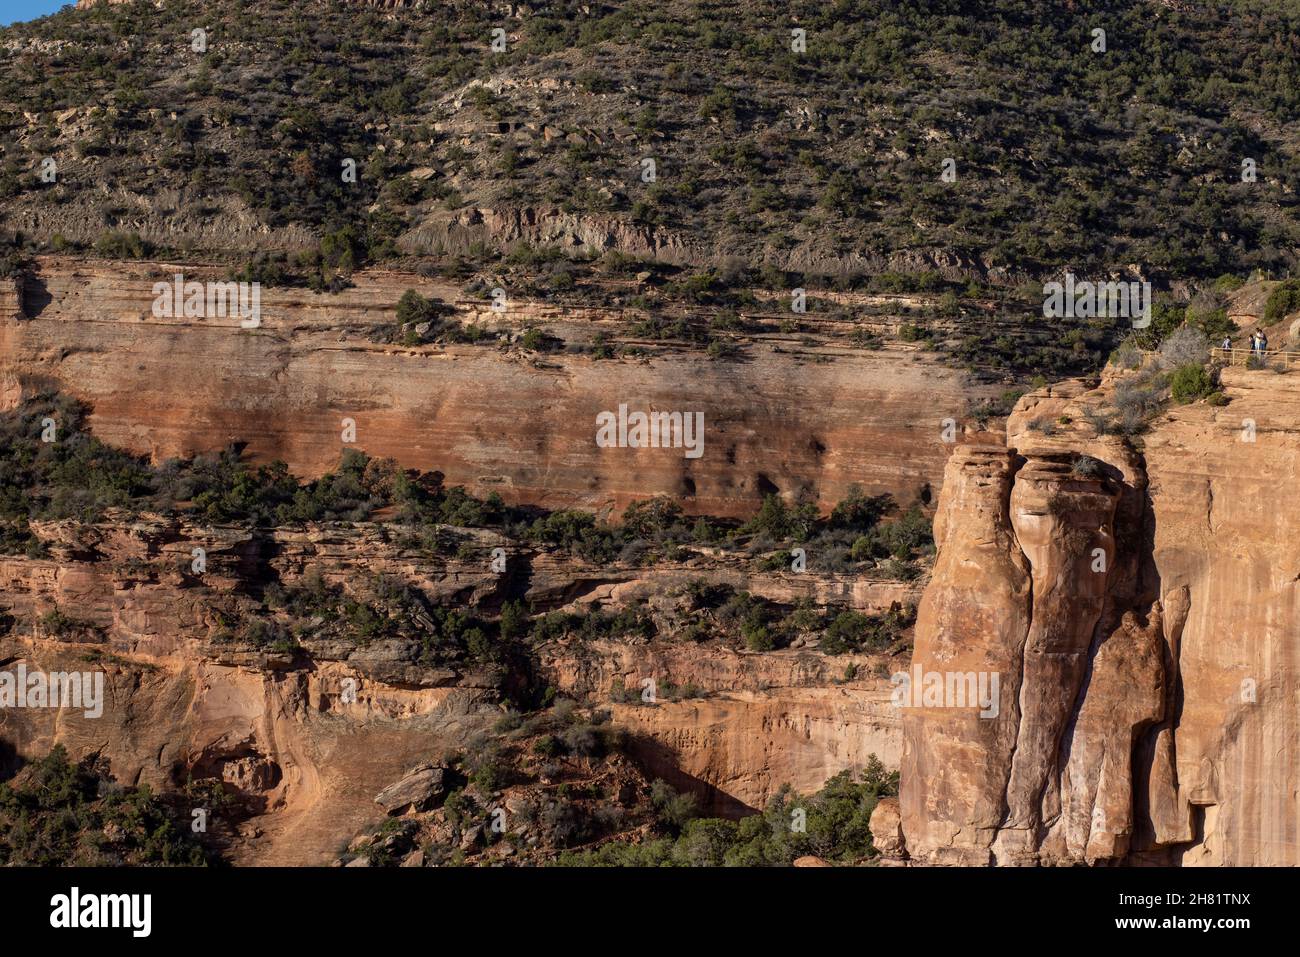 Colorado National Monument near Grand Junction Colorado. an area of desert land high on the Colorado Plateau. Stock Photo